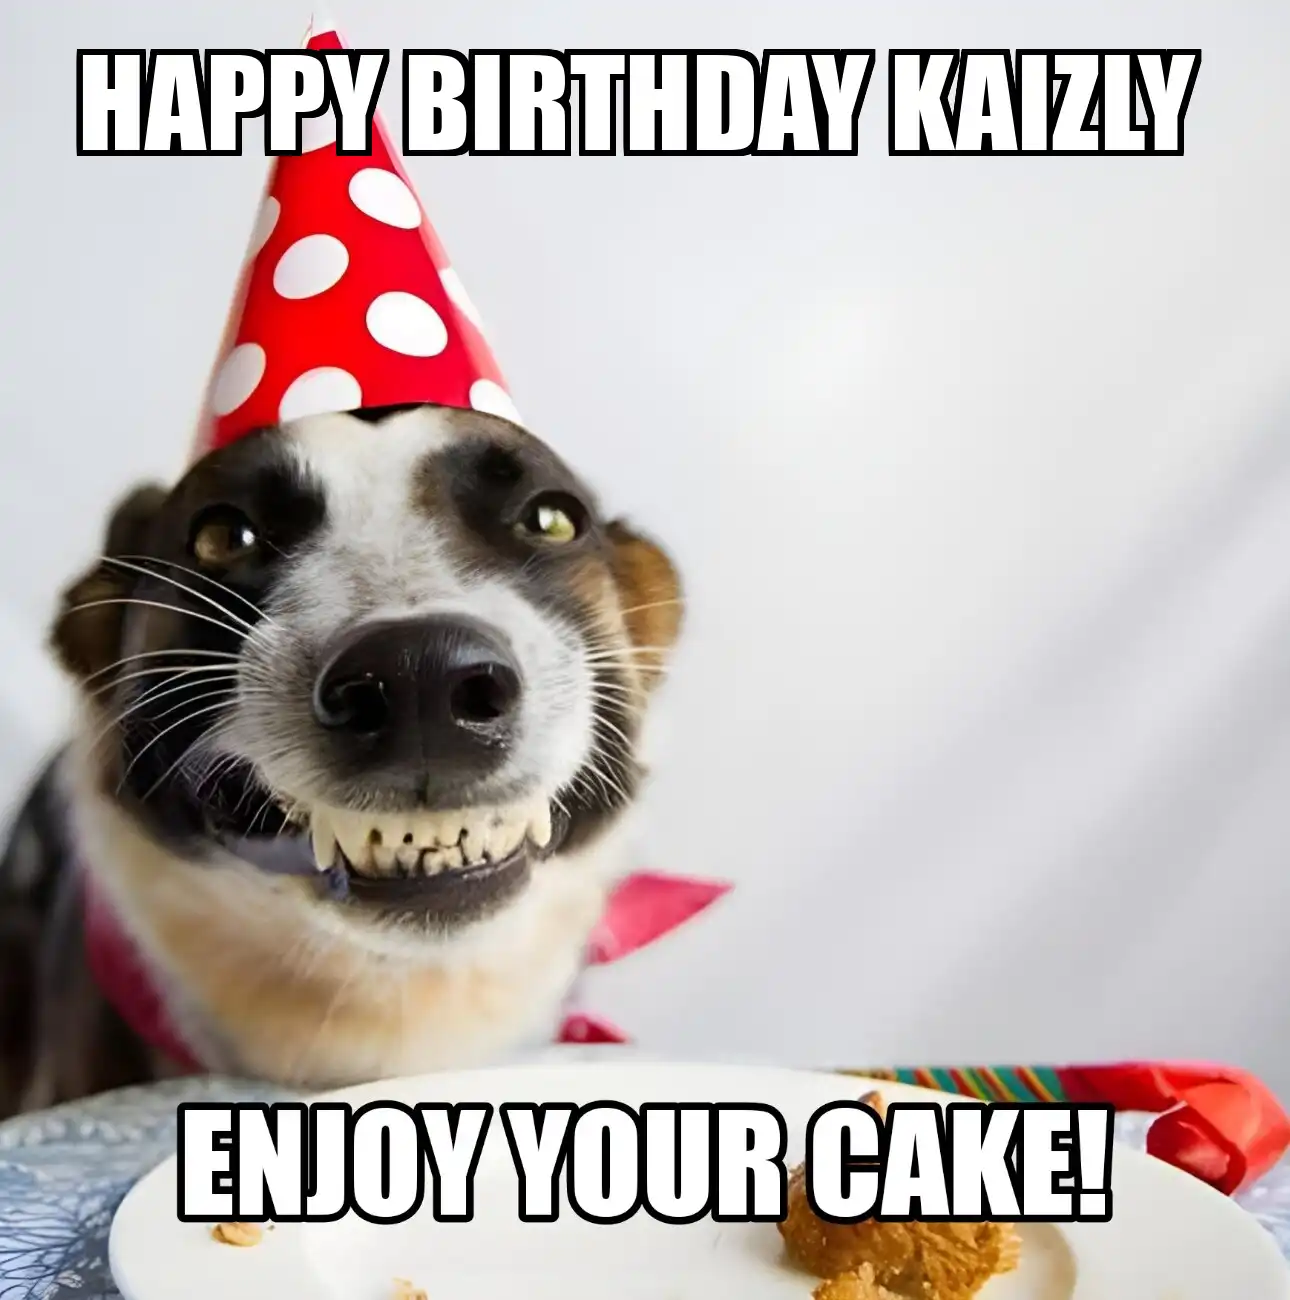 Happy Birthday Kaizly Enjoy Your Cake Dog Meme